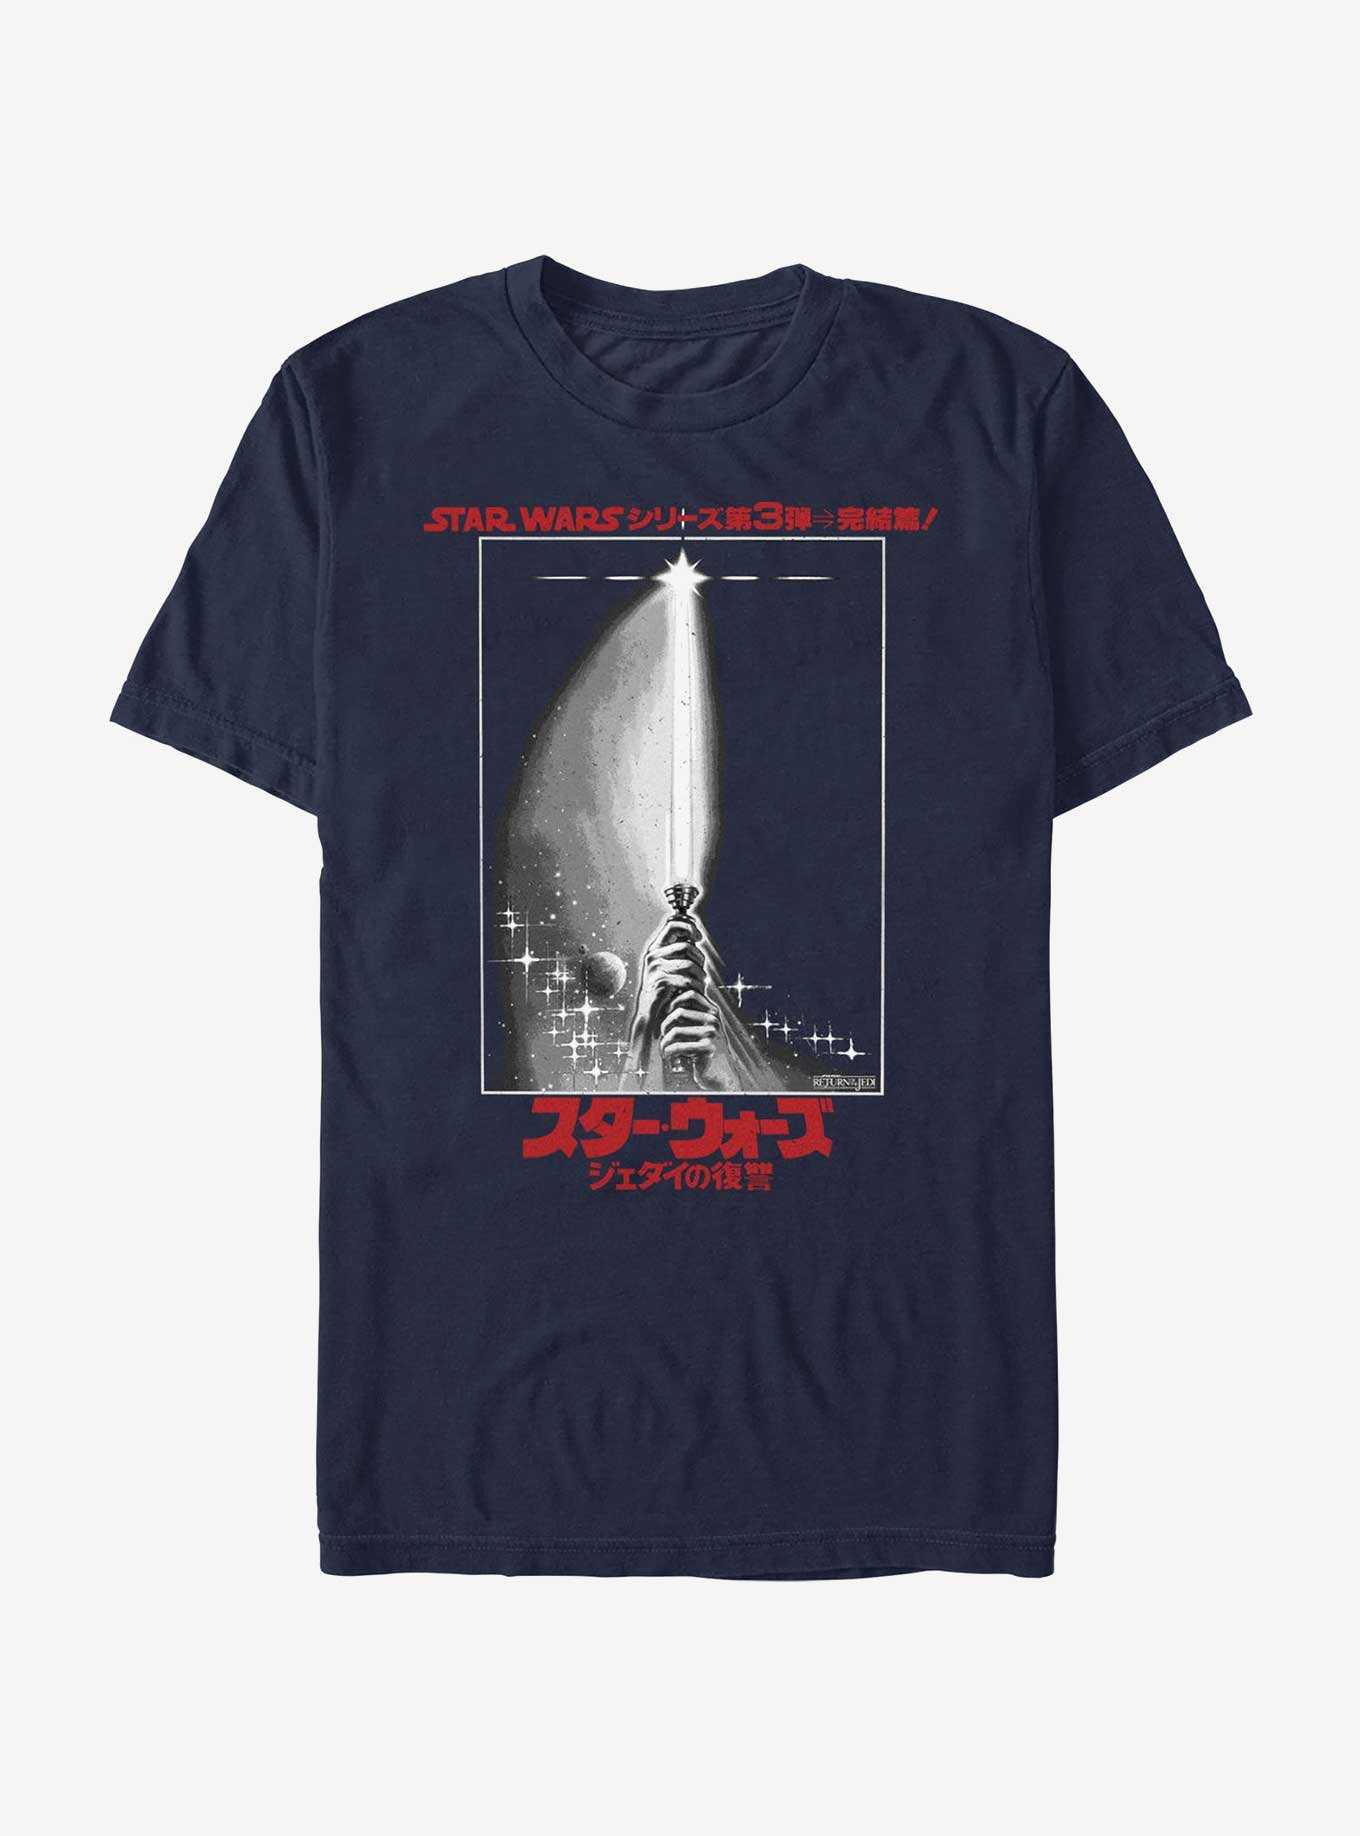 Star Wars Return of the Jedi 40th Anniversary Lightsaber Poster T-Shirt, , hi-res